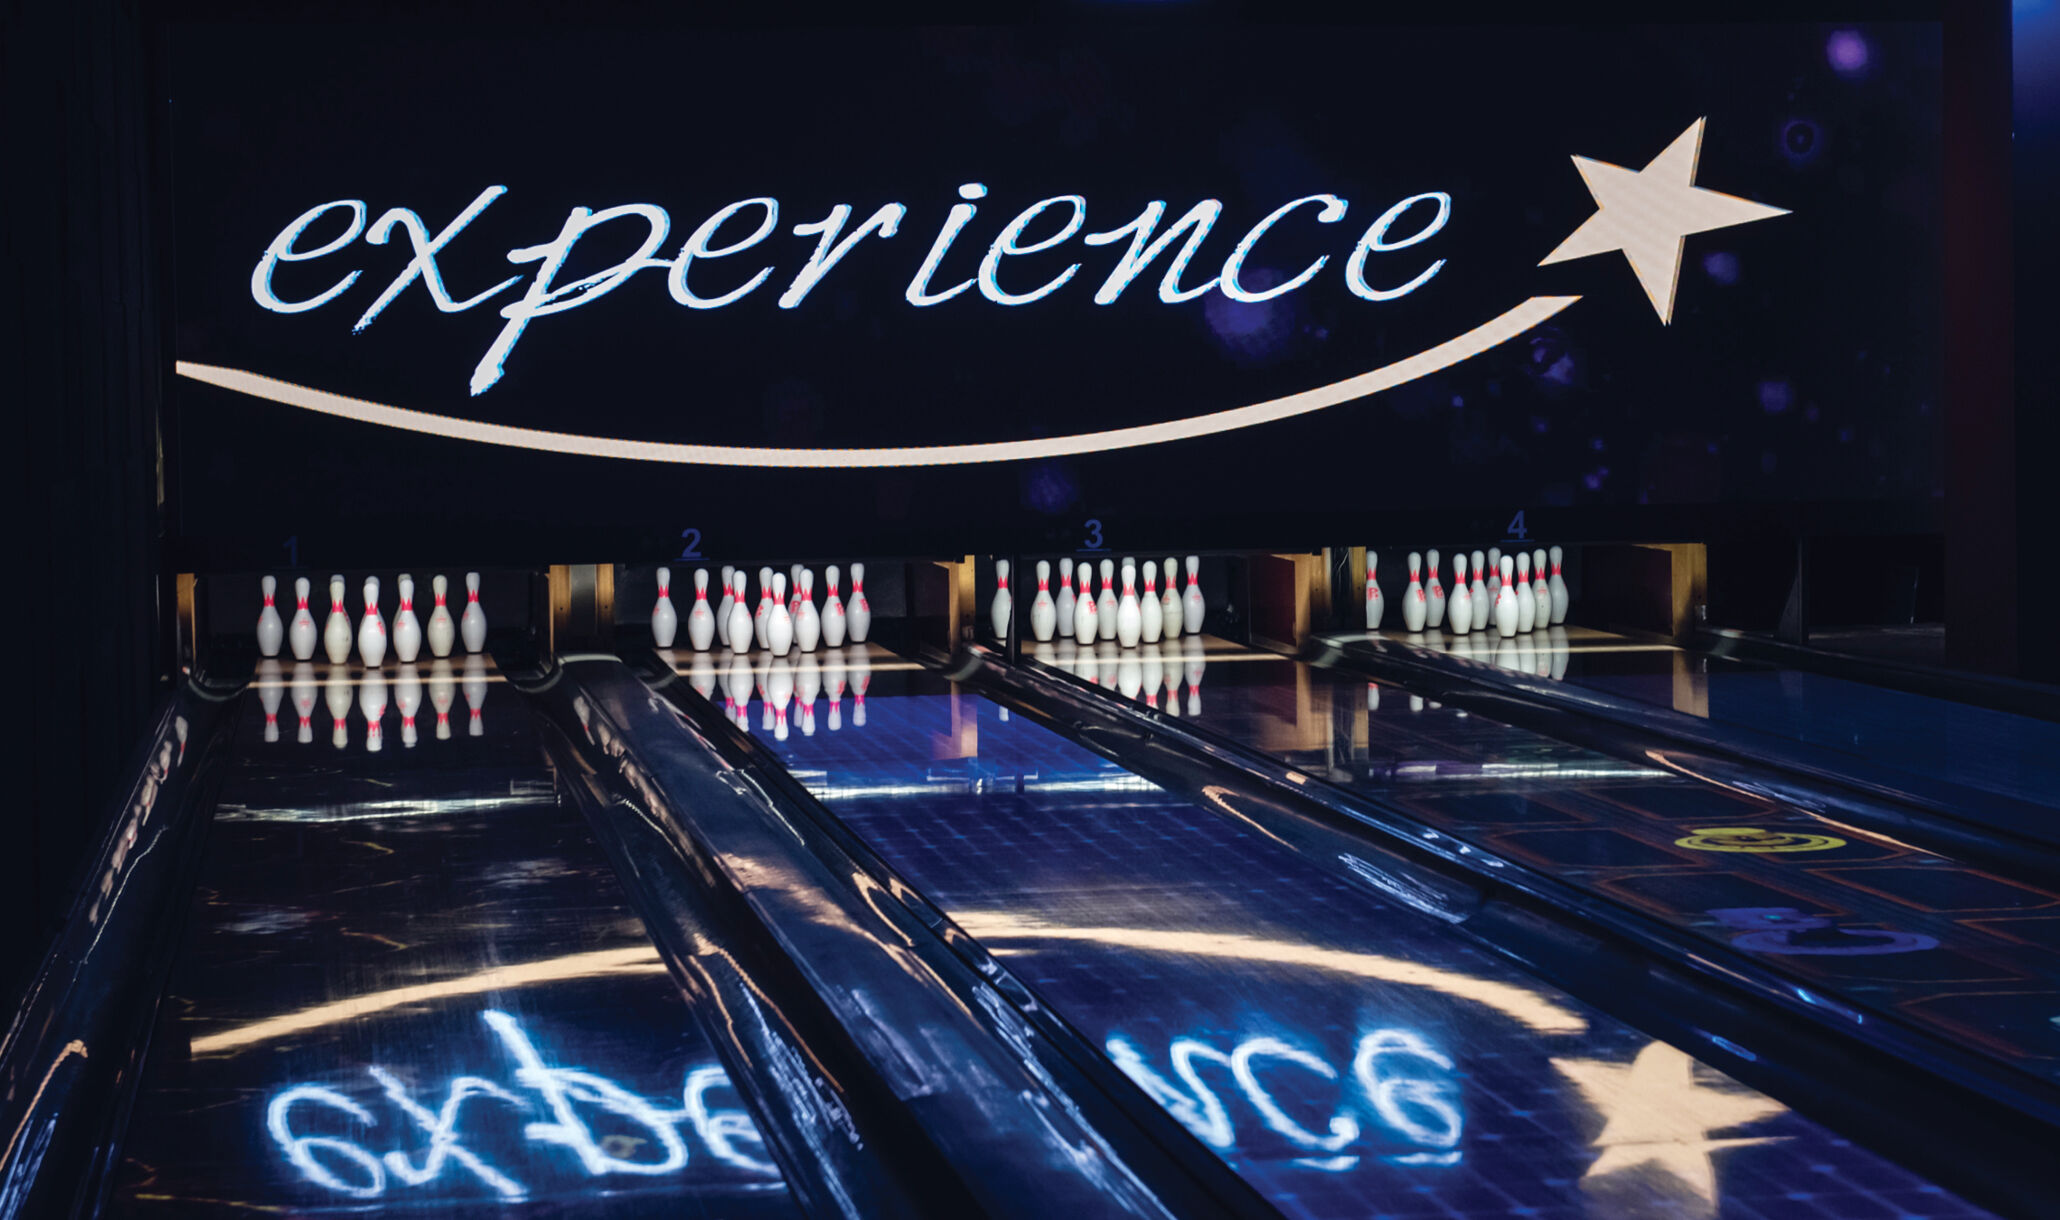 Estrella Park Bowling - Madrid, Spain - Experience-1